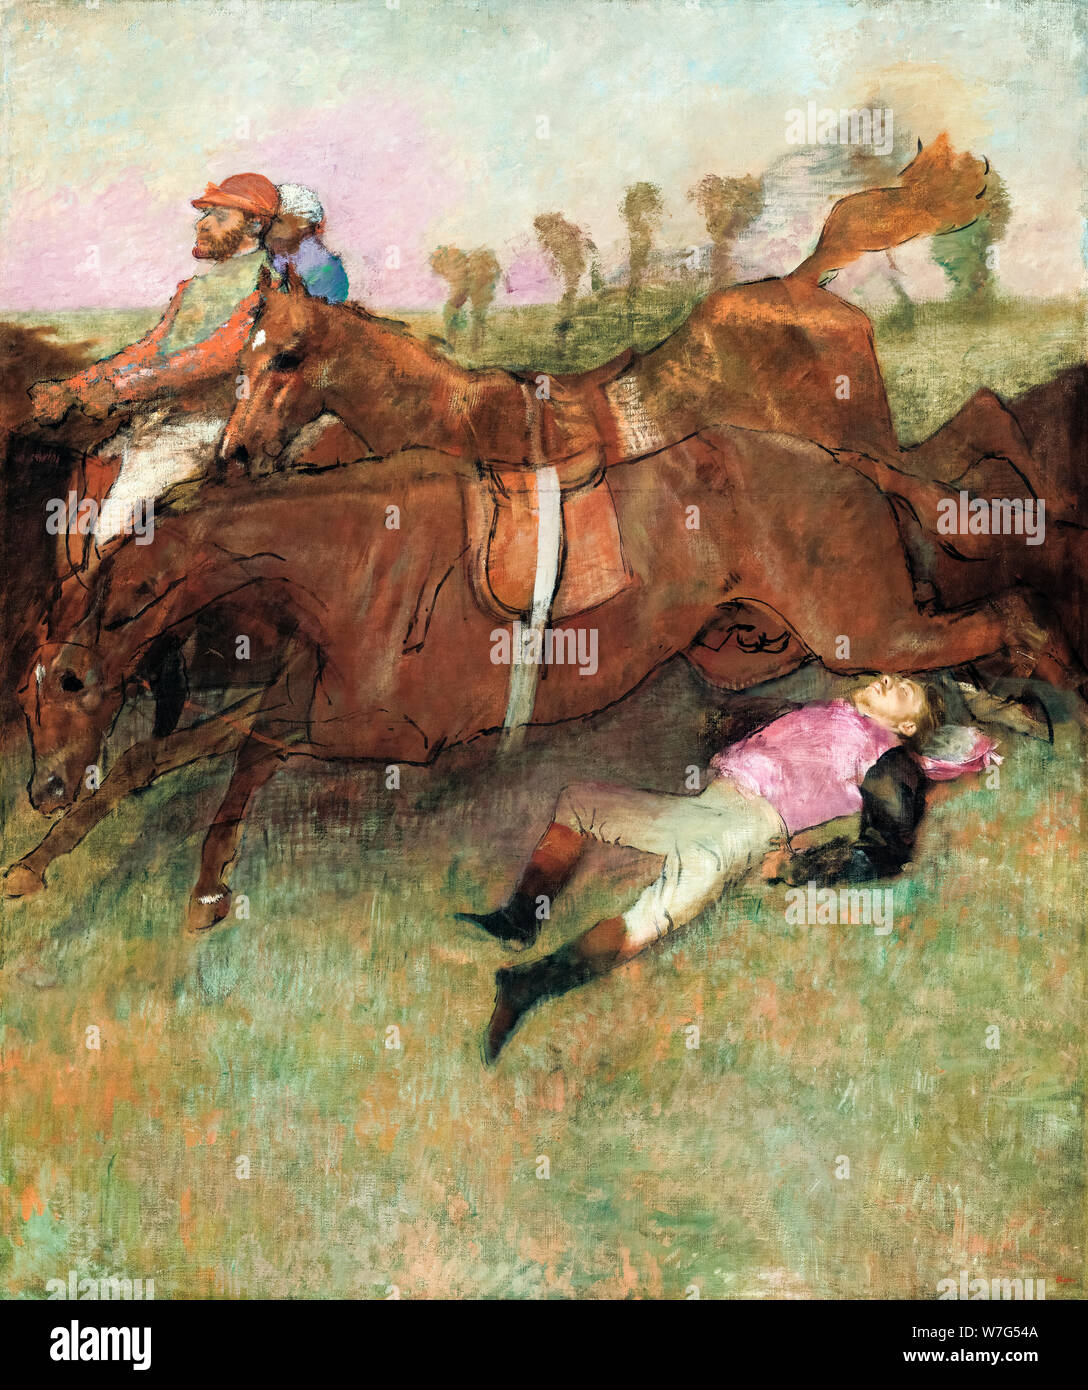 Edgar Degas, scène de la course d'obstacles, le Jockey tombé, peinture, 1866-1897 Banque D'Images